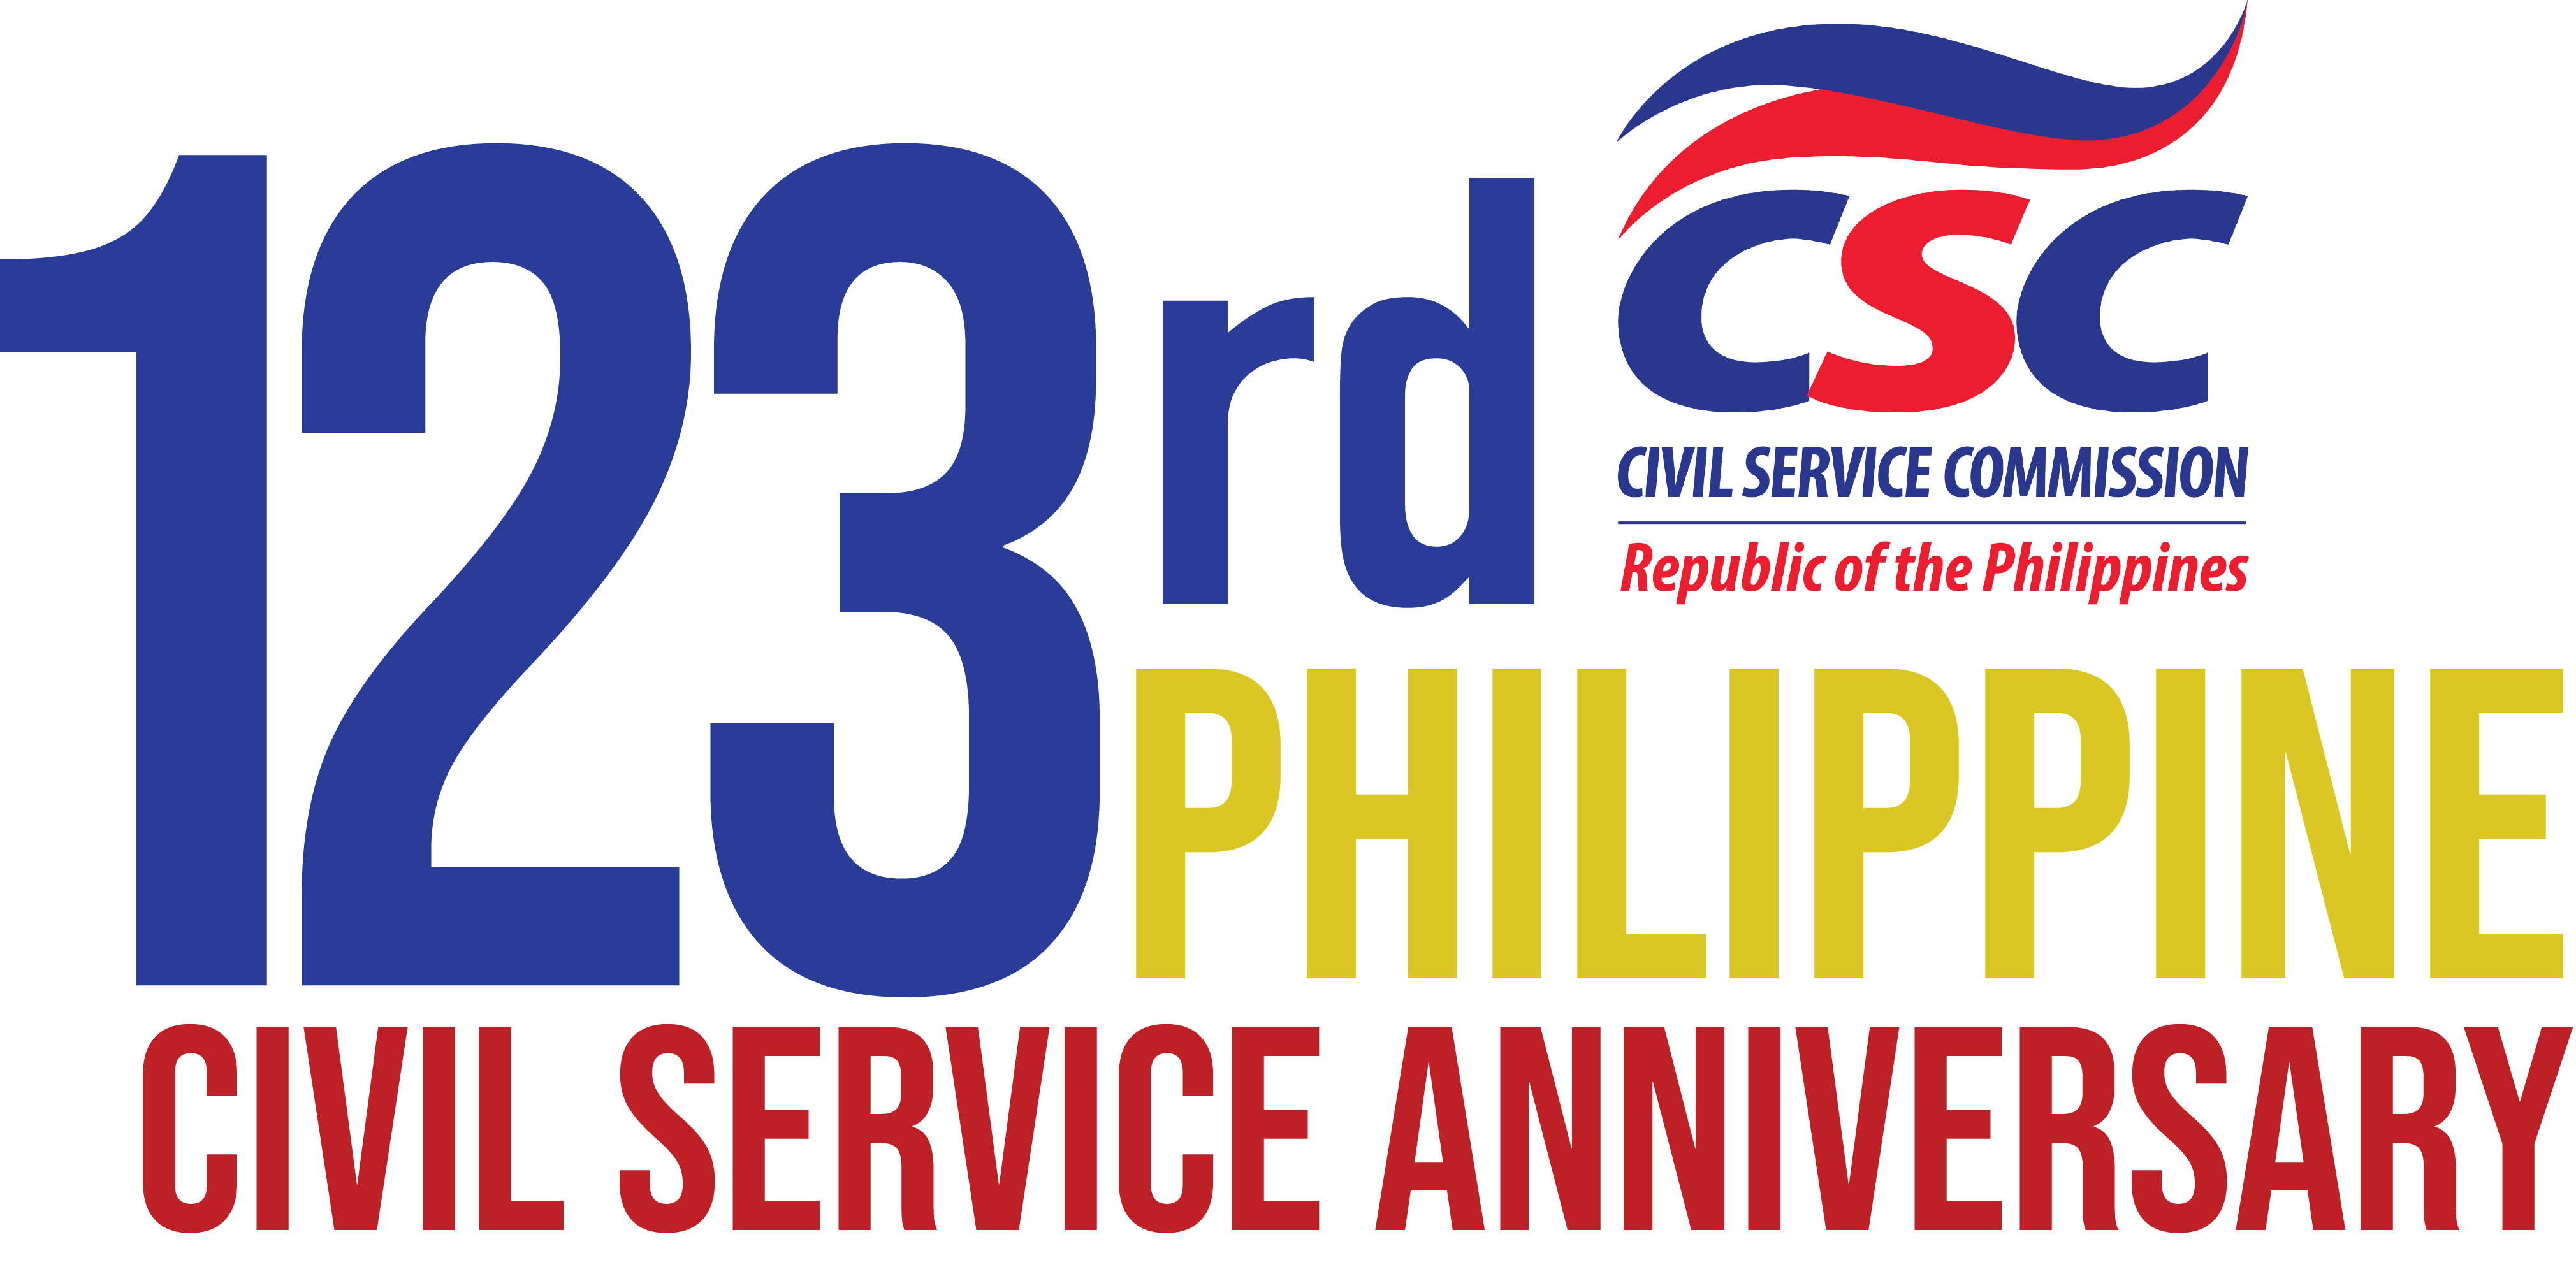 Csc Logo PNG Images, Free Transparent Csc Logo Download - KindPNG